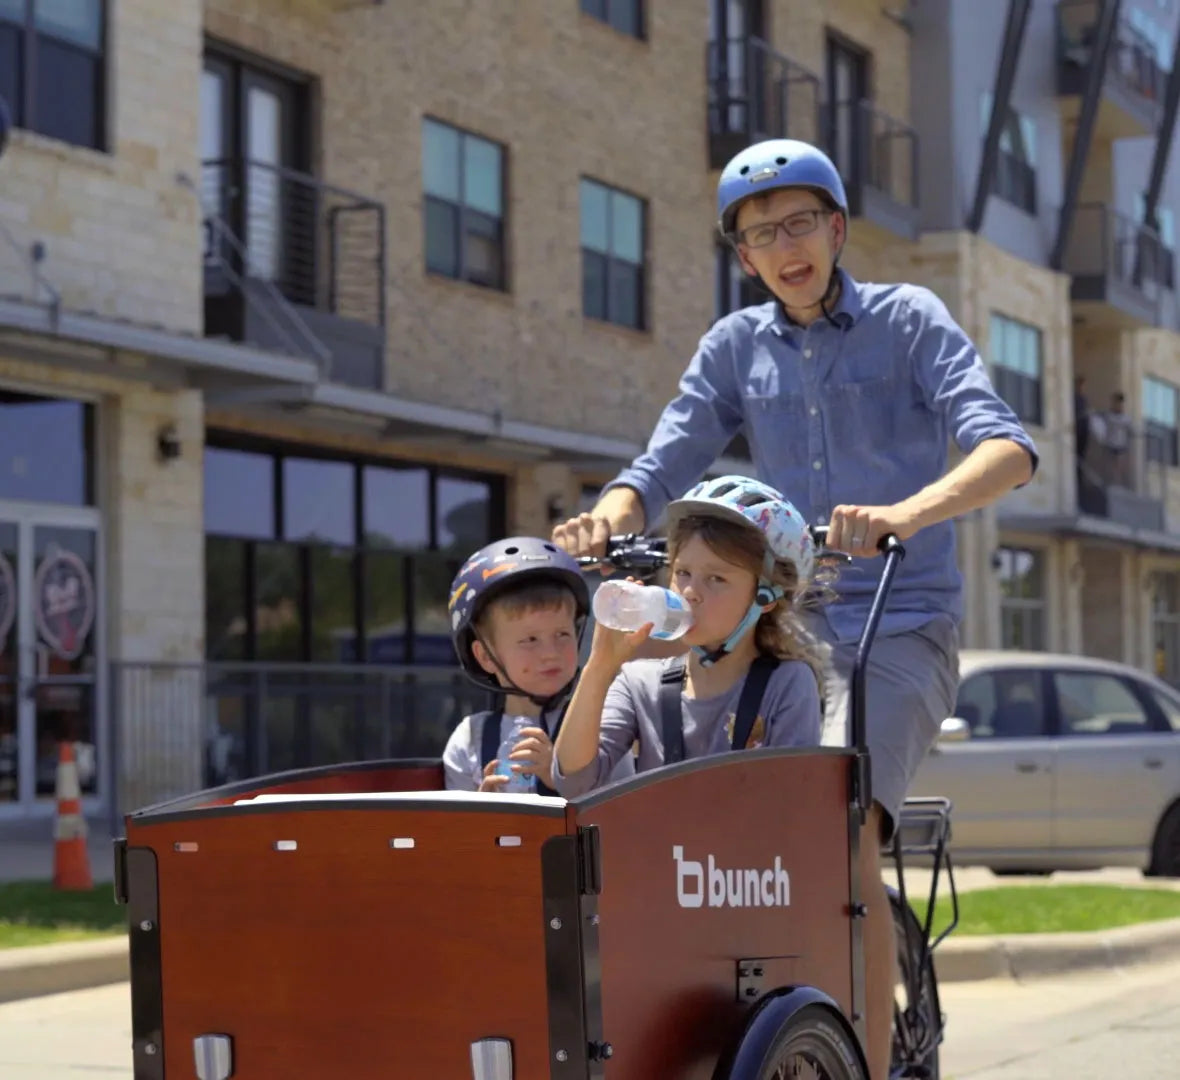 Aaron and Kids Riding Bunch Bike